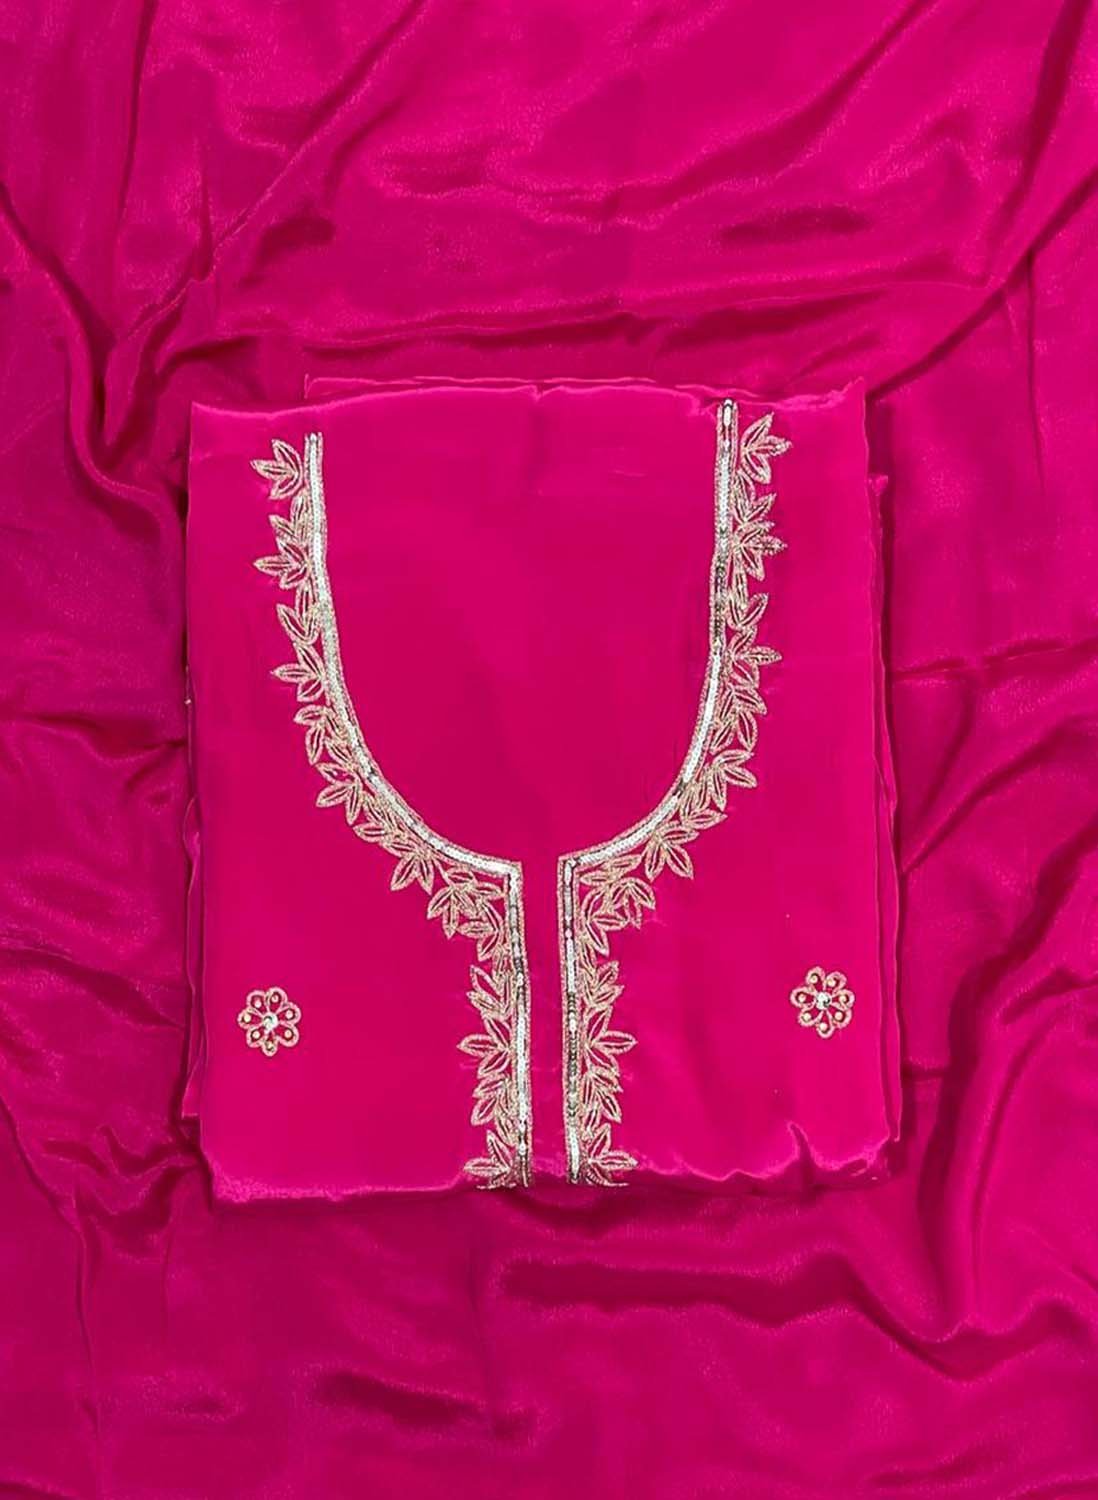 Hot Pink Crepe Suit | Party Wear | Wedding | Jaggo | Celebrity